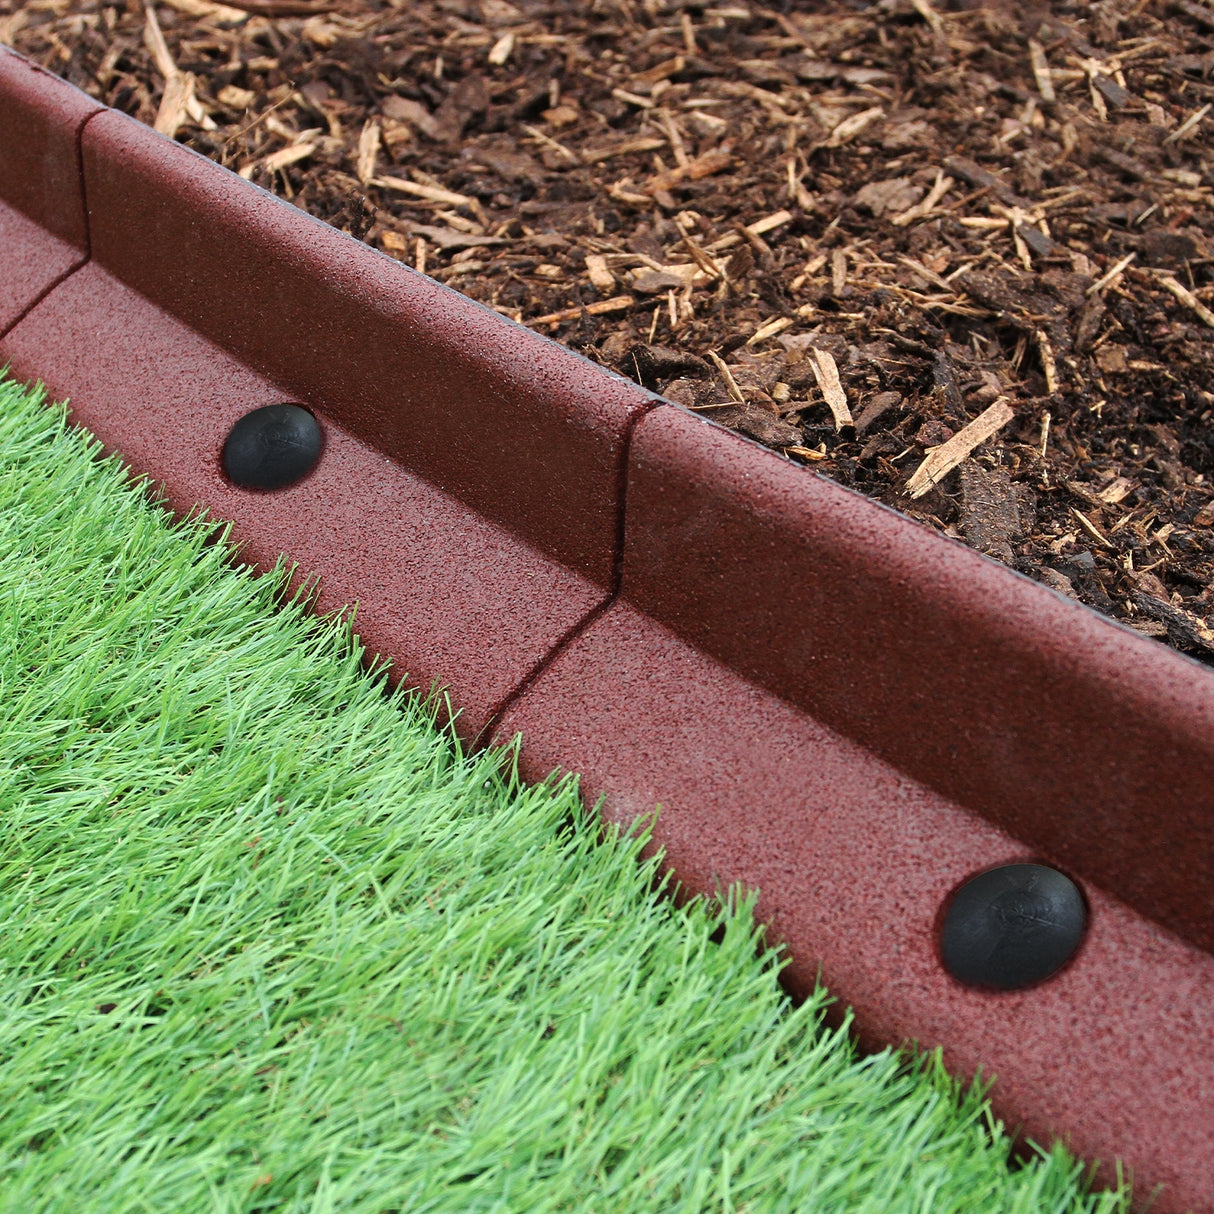 Flexible Lawn Edging Terracotta 1.2m x 10